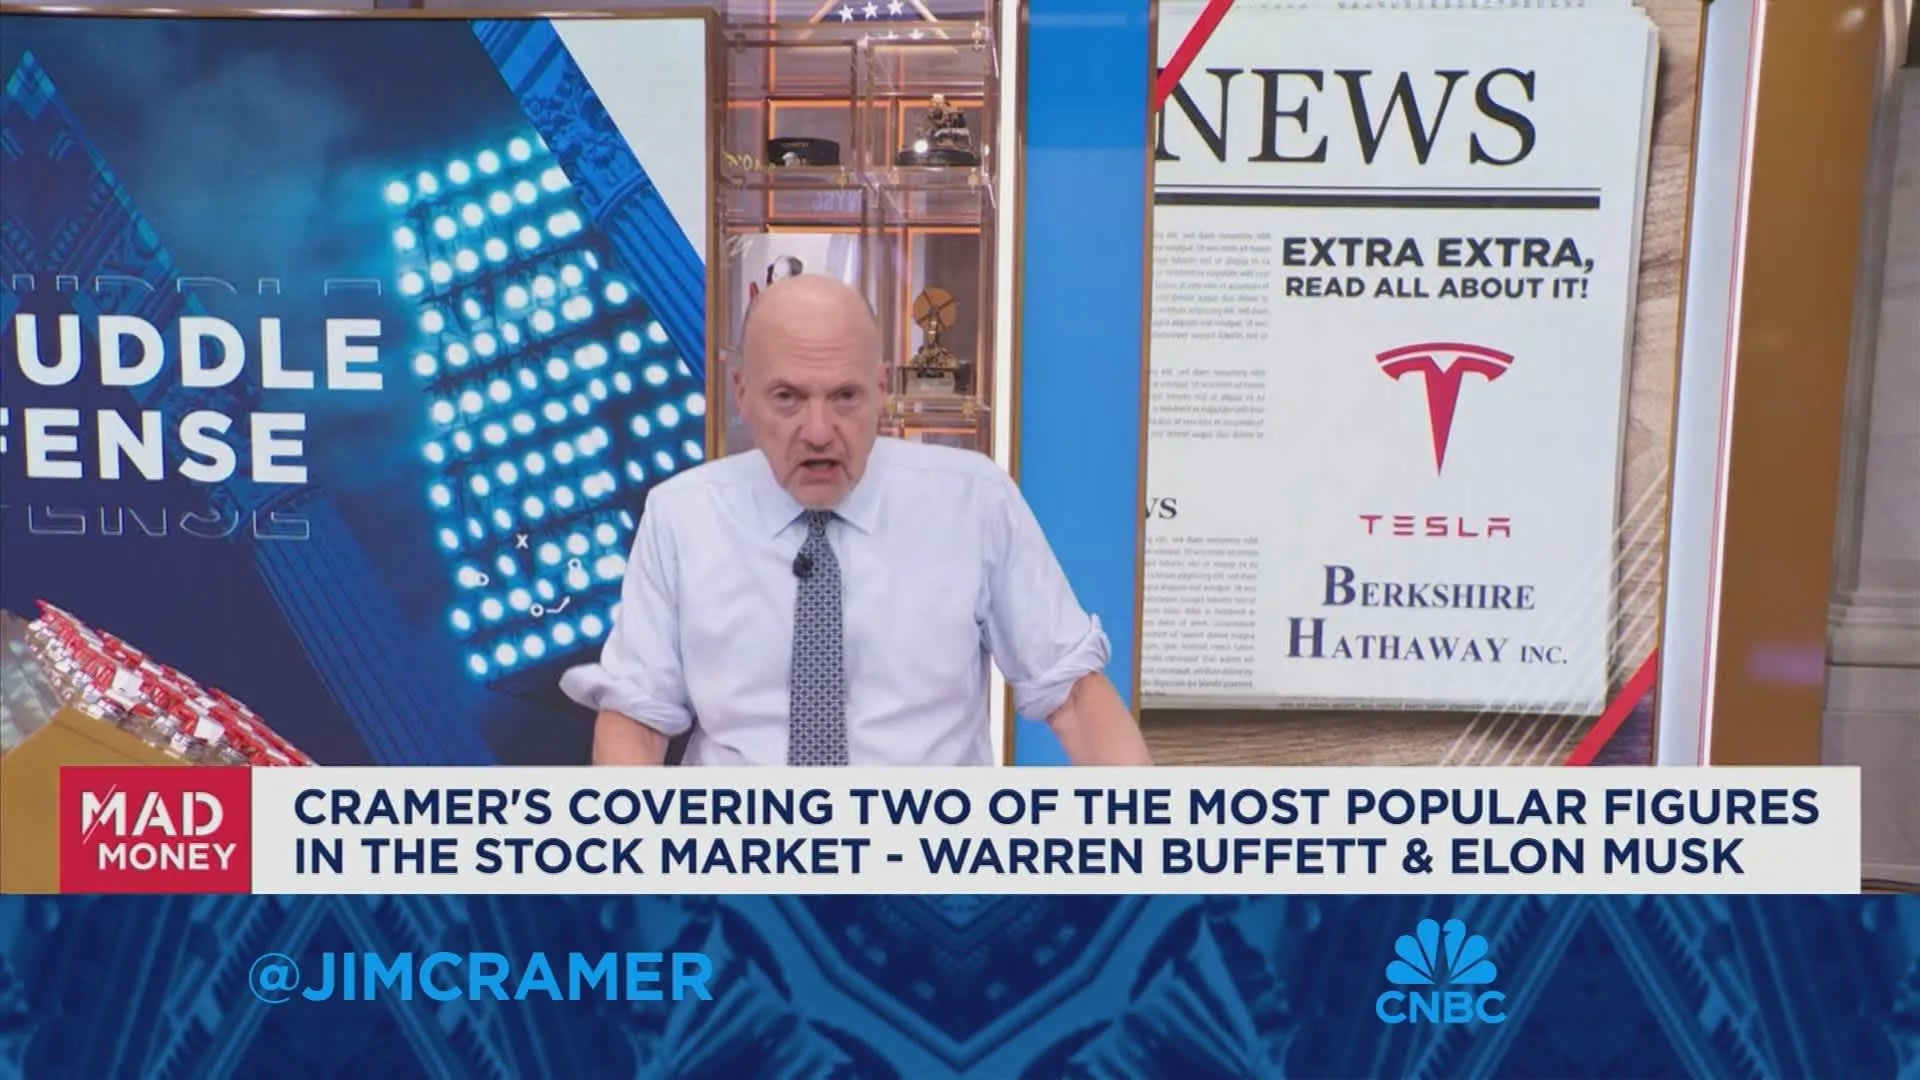 Cramer compares Warren Buffett and Elon Musk, says Wall Street has turned on Tesla CEO